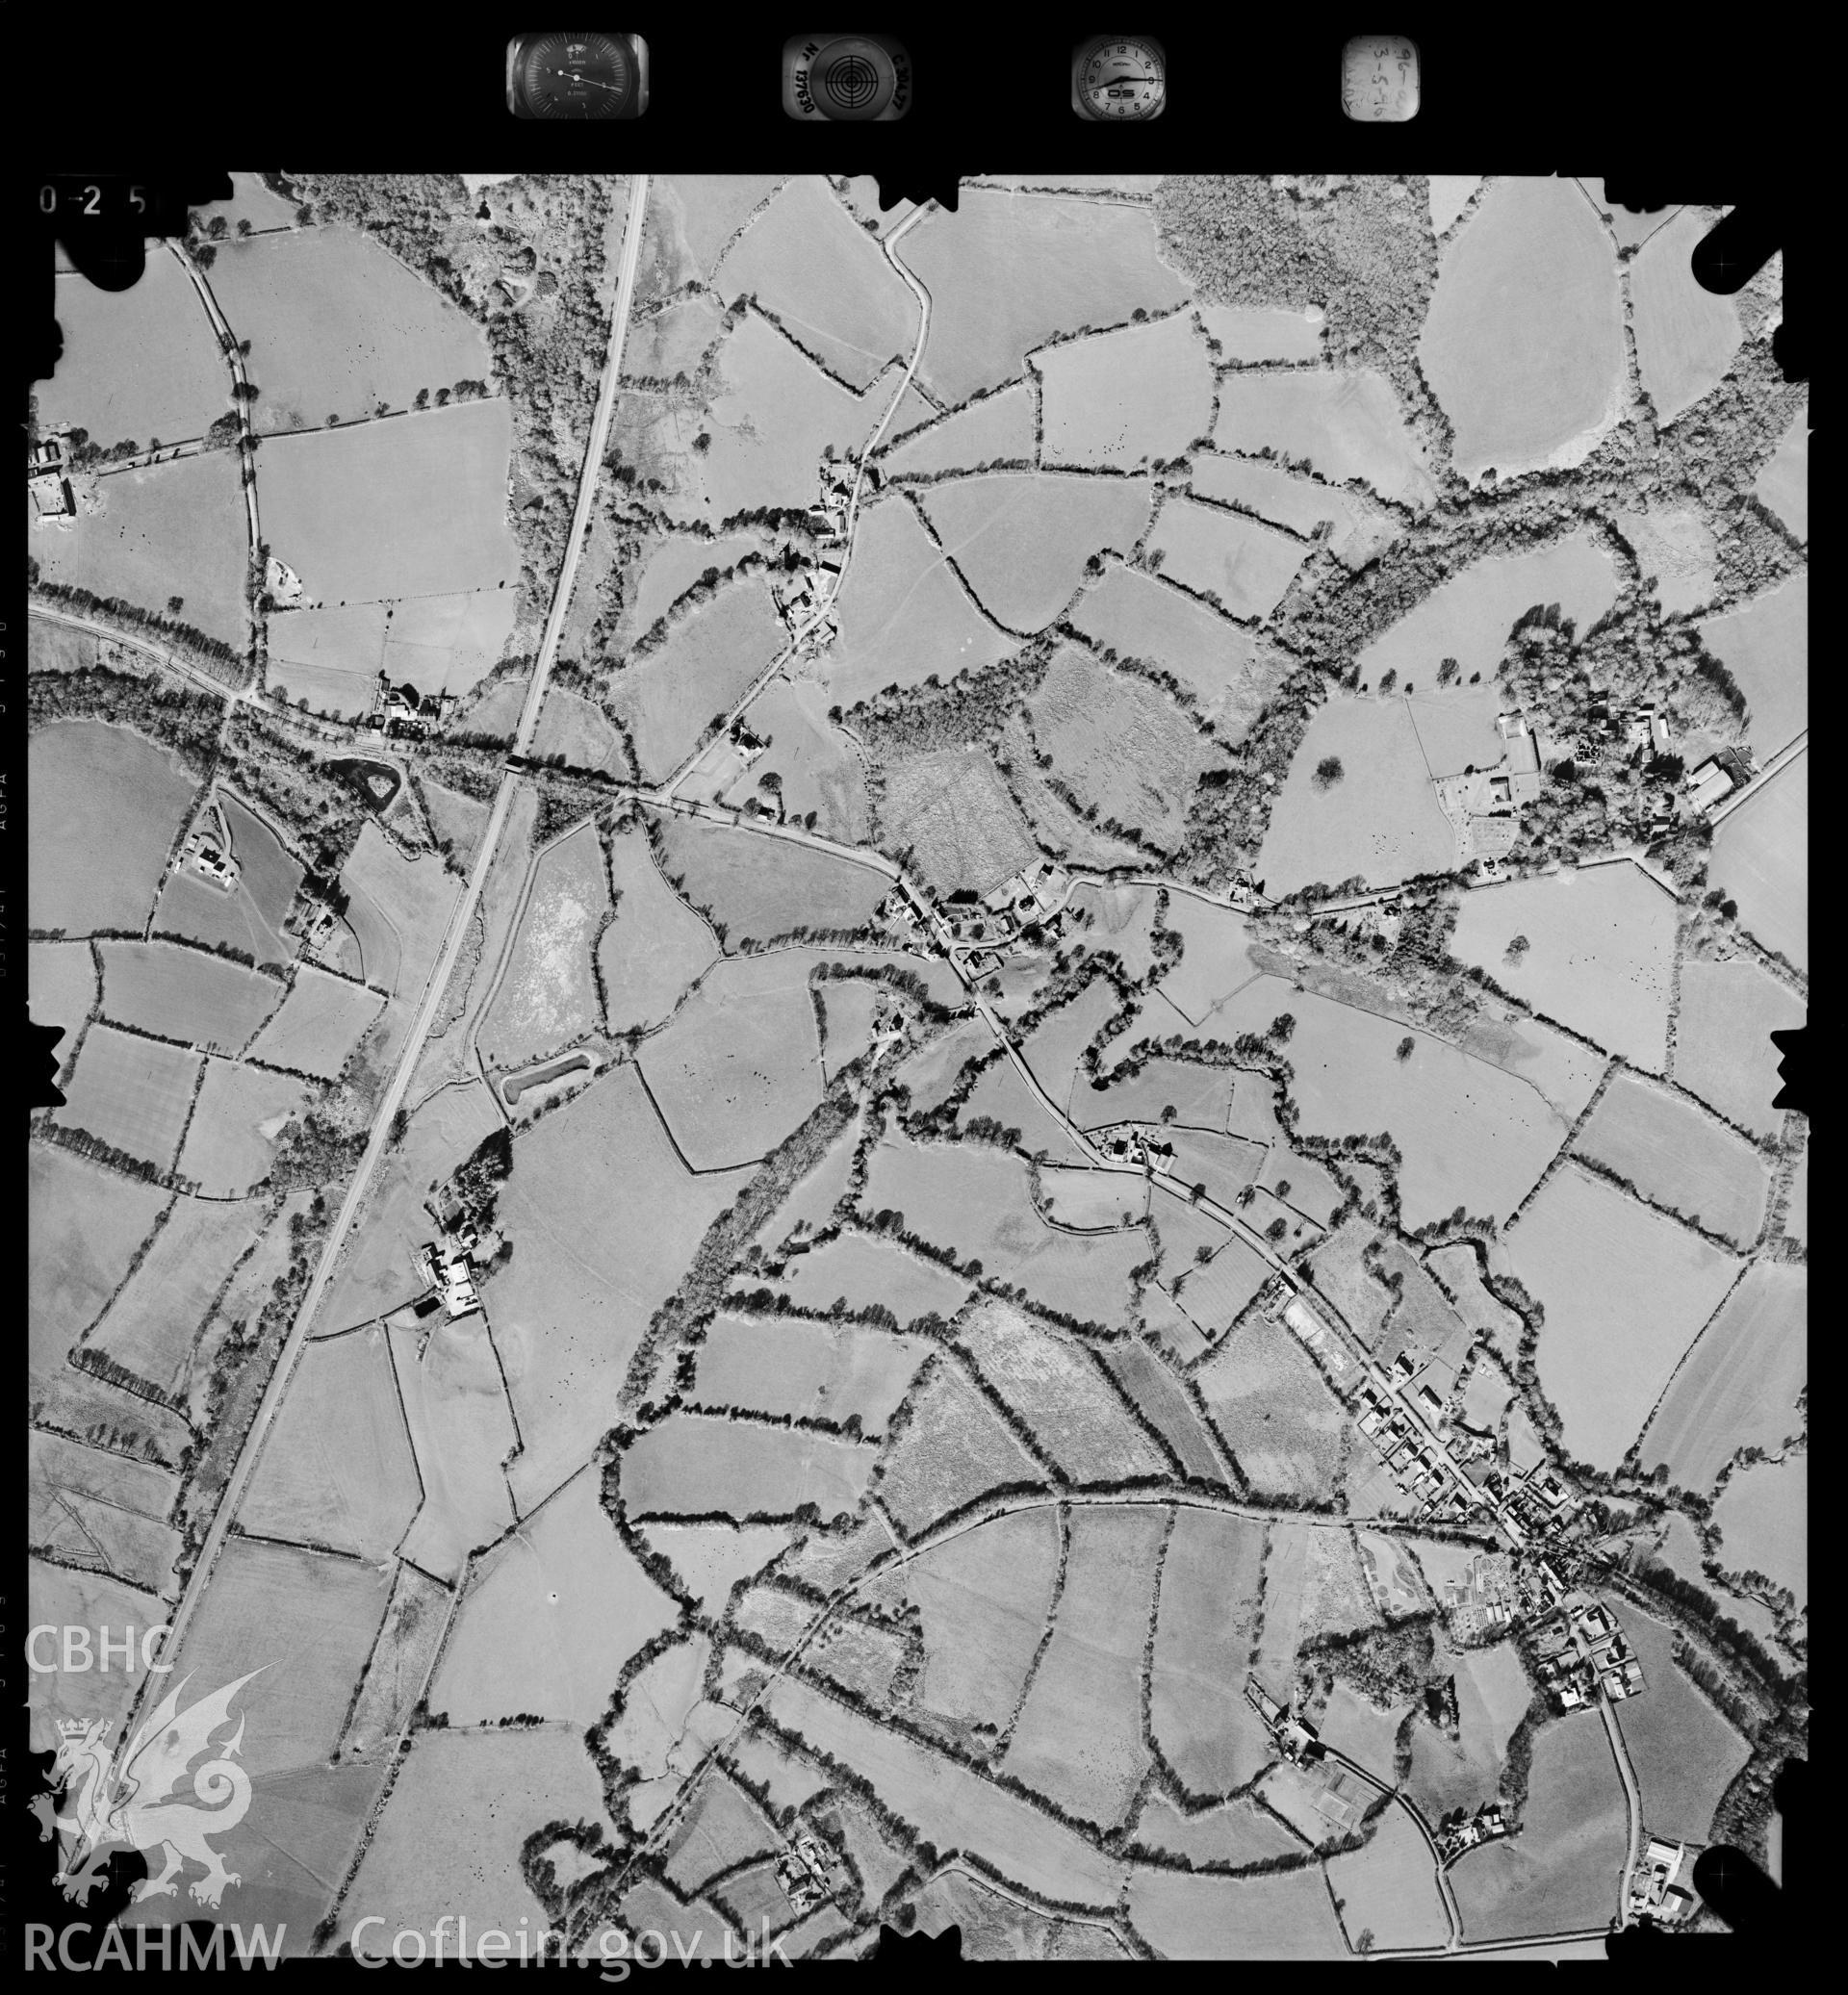 Digitized copy of an aerial photograph showing Llanfallteg area, taken by Ordnance Survey, 1996